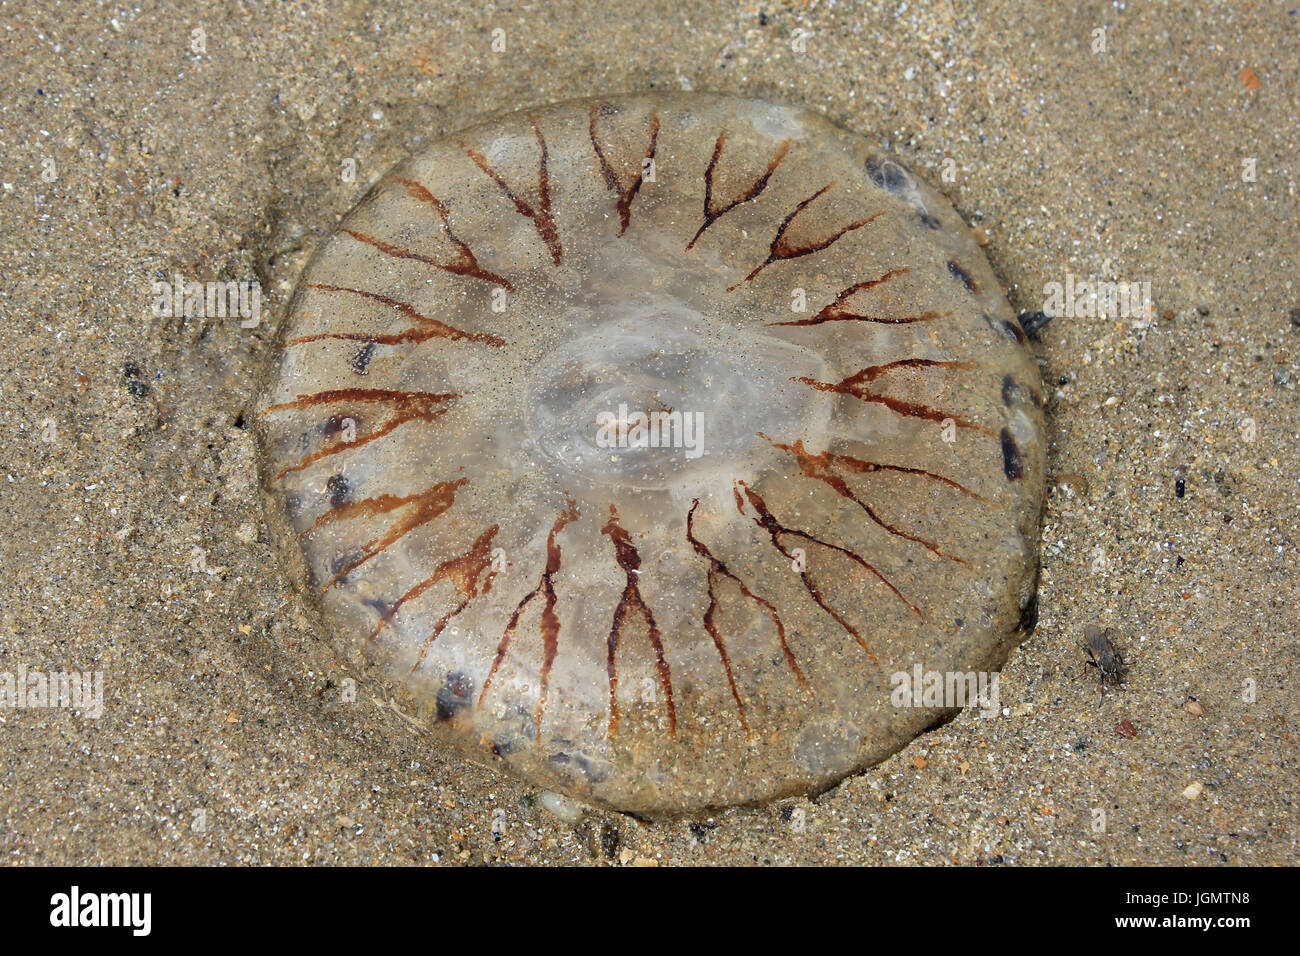 Compass Jellyfish Chrysaora hysoscella Stock Photo